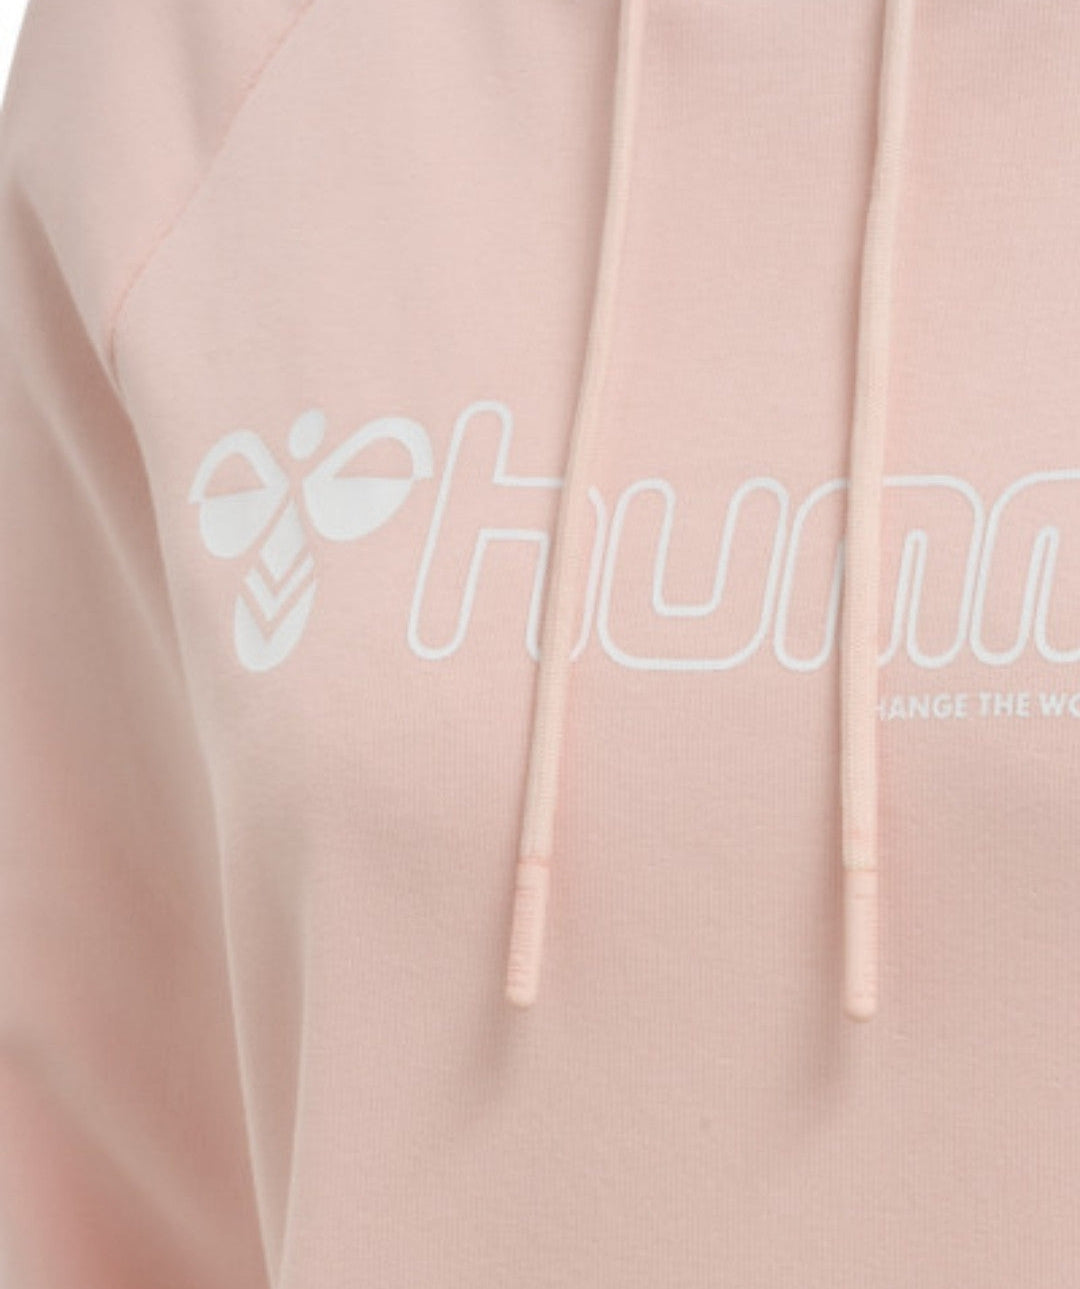 Hummel® - Noni 2.0 Hoodie (Chalk Pink)